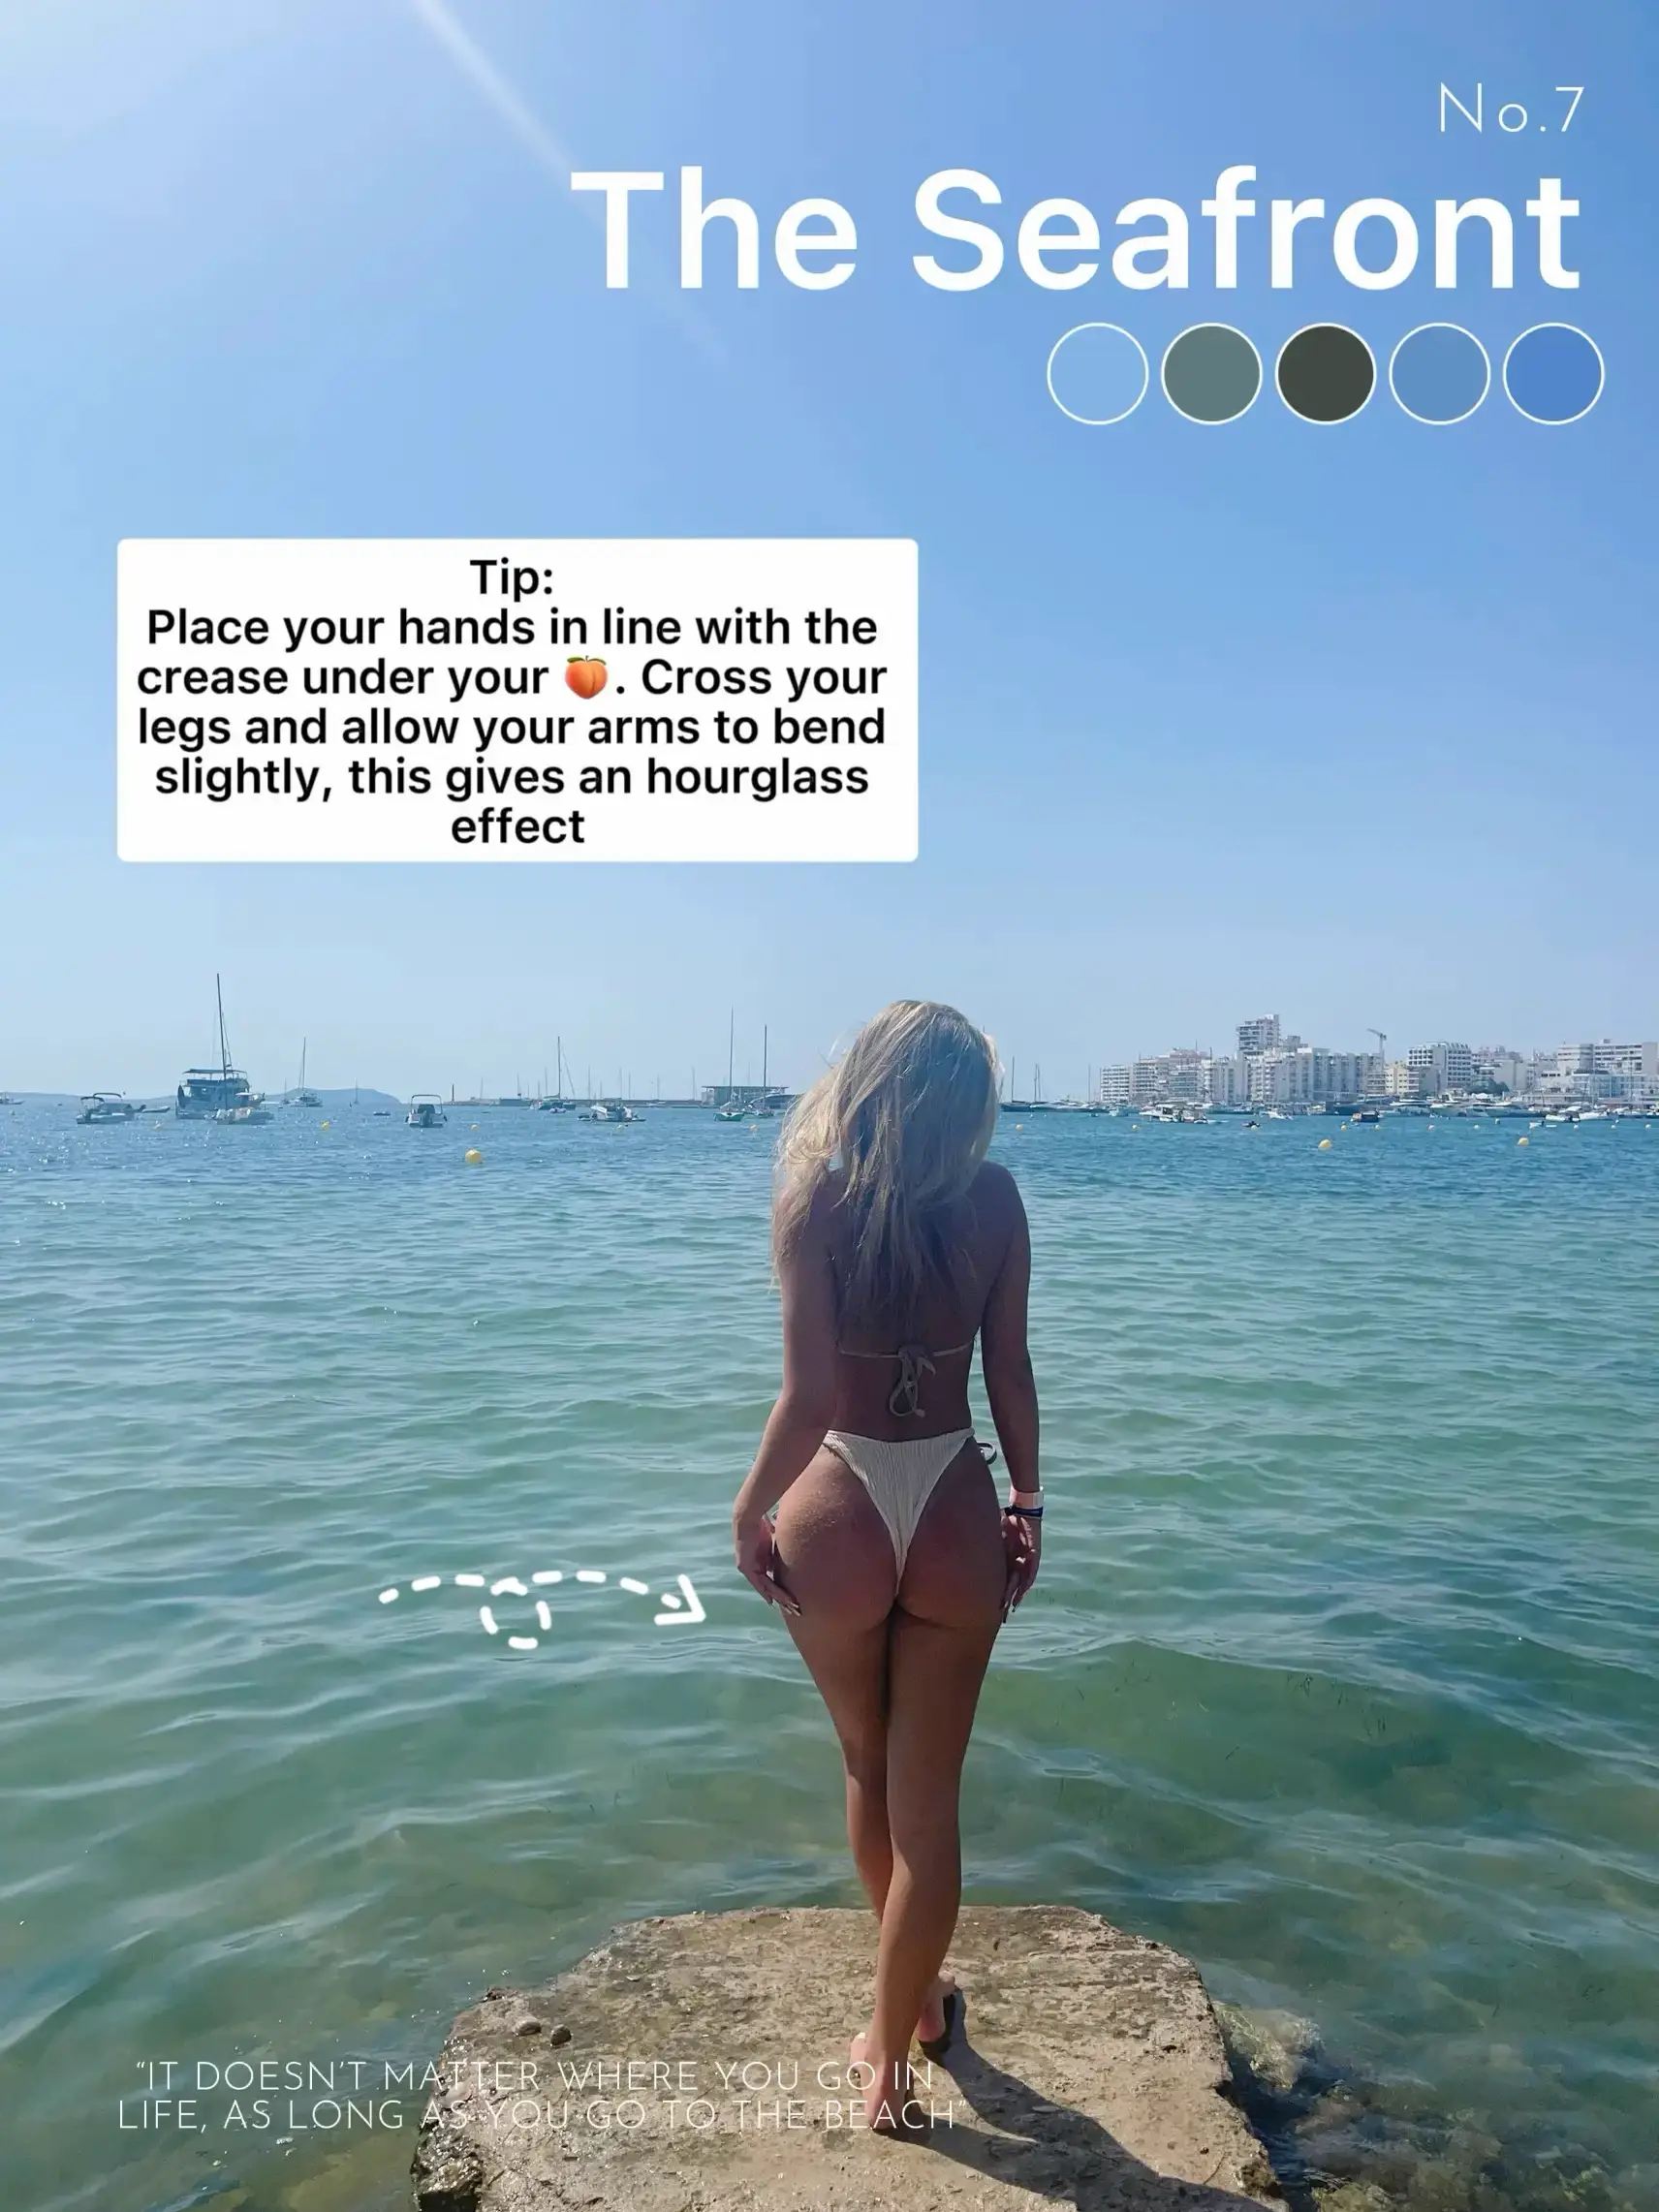  A woman in a bikini is standing on a rock near the water.